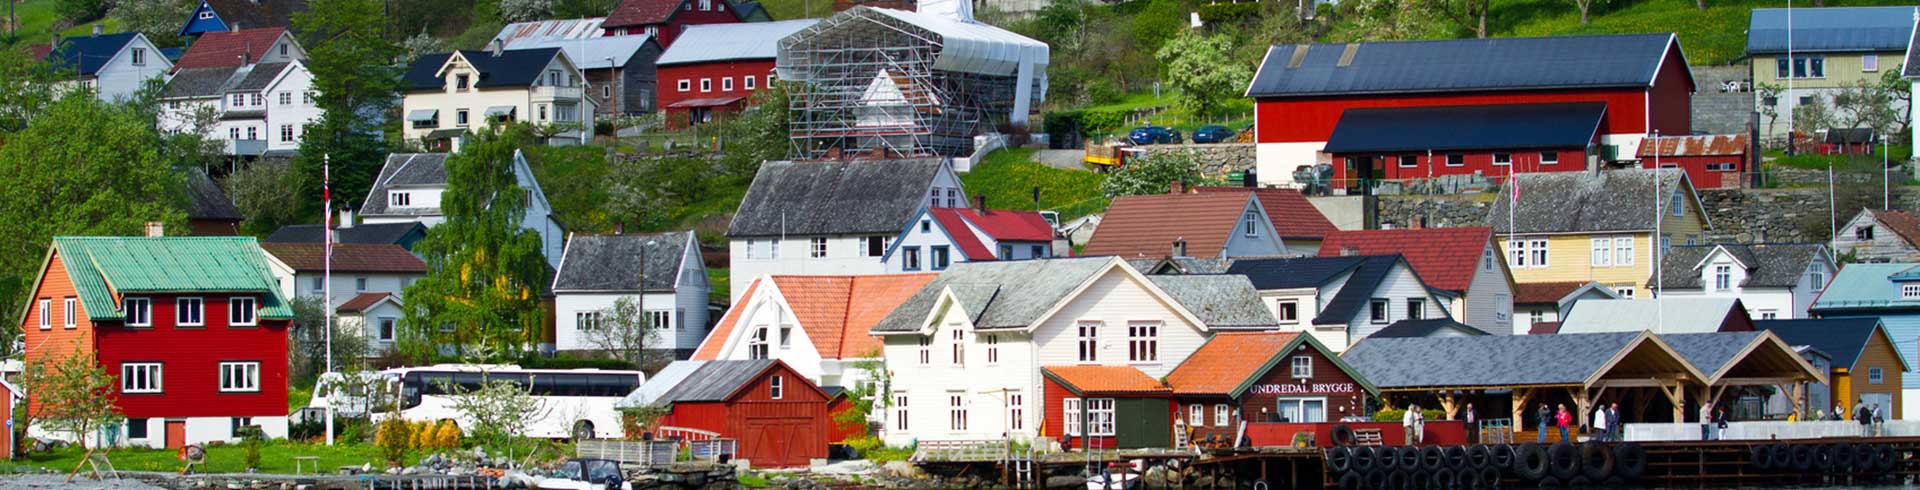 Fjord Bergen